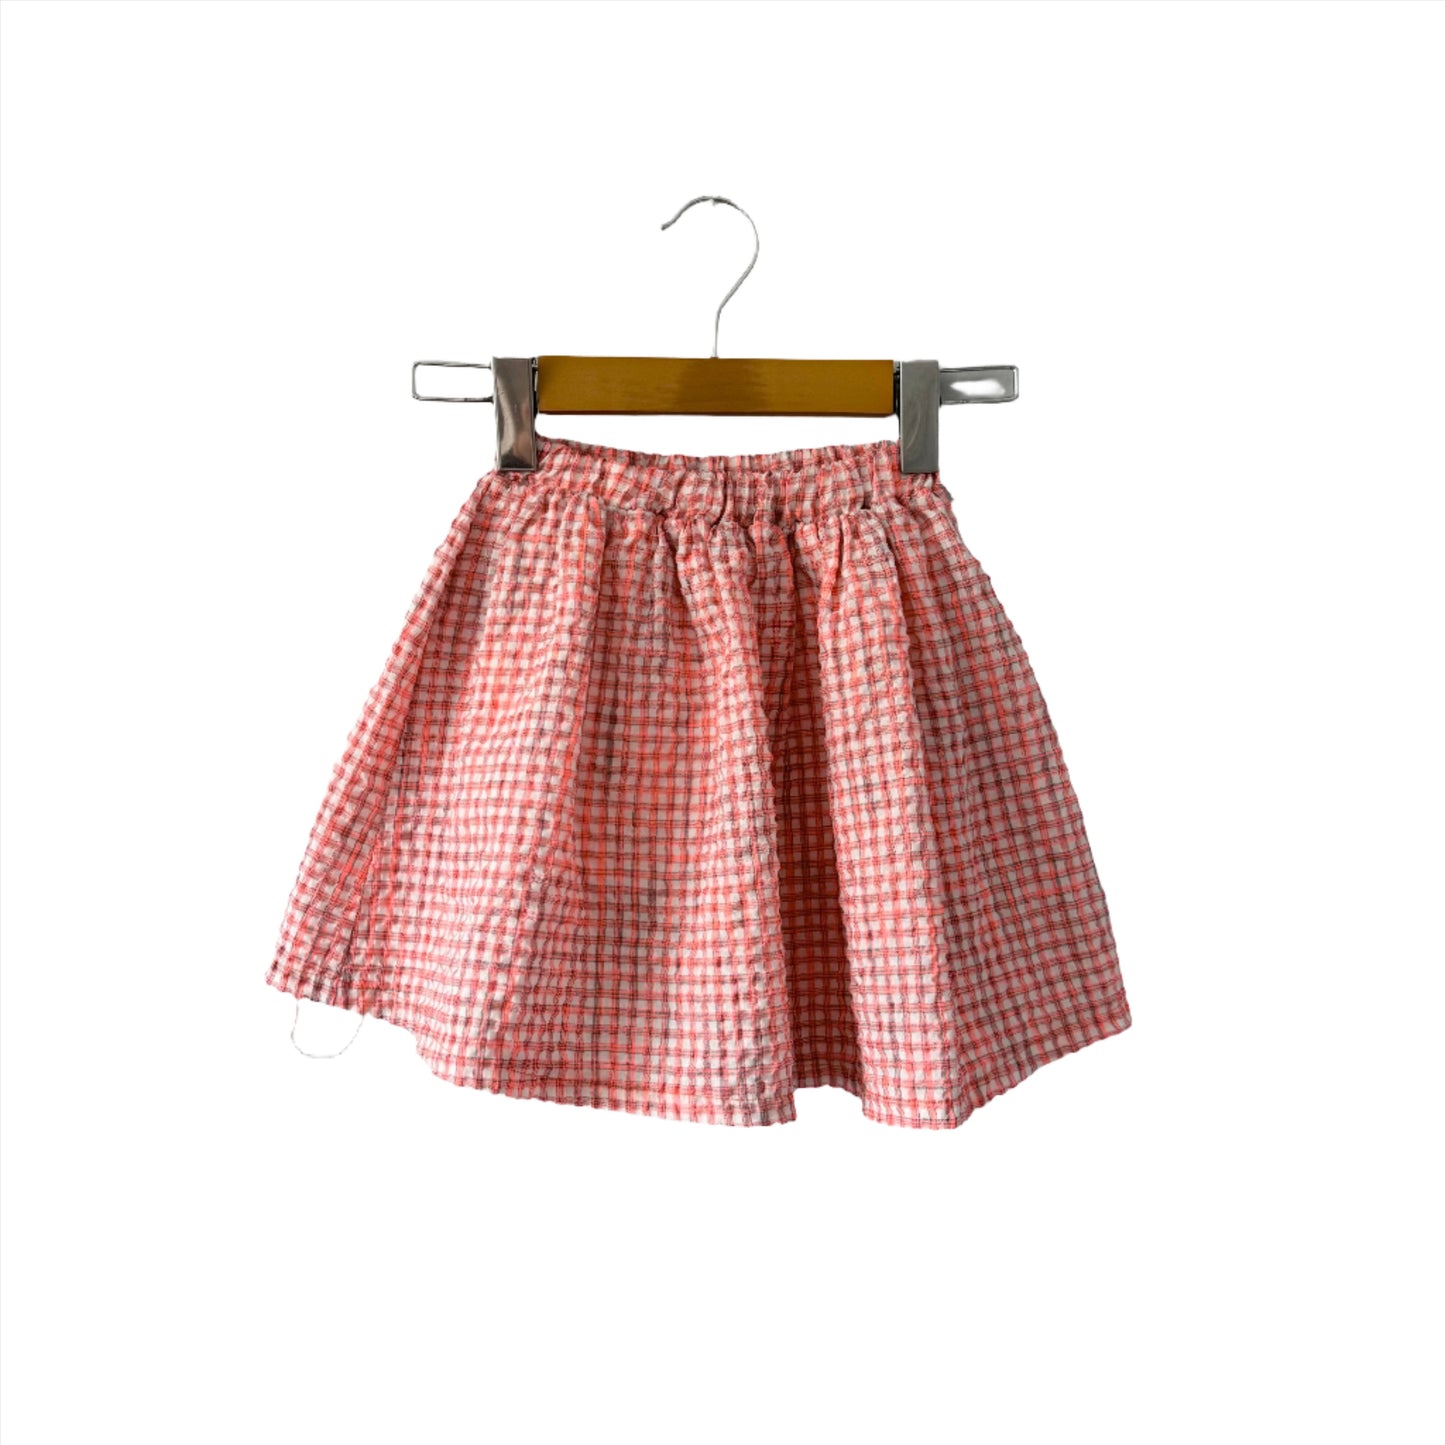 Only U / Neon orange skirt / 8-10Y